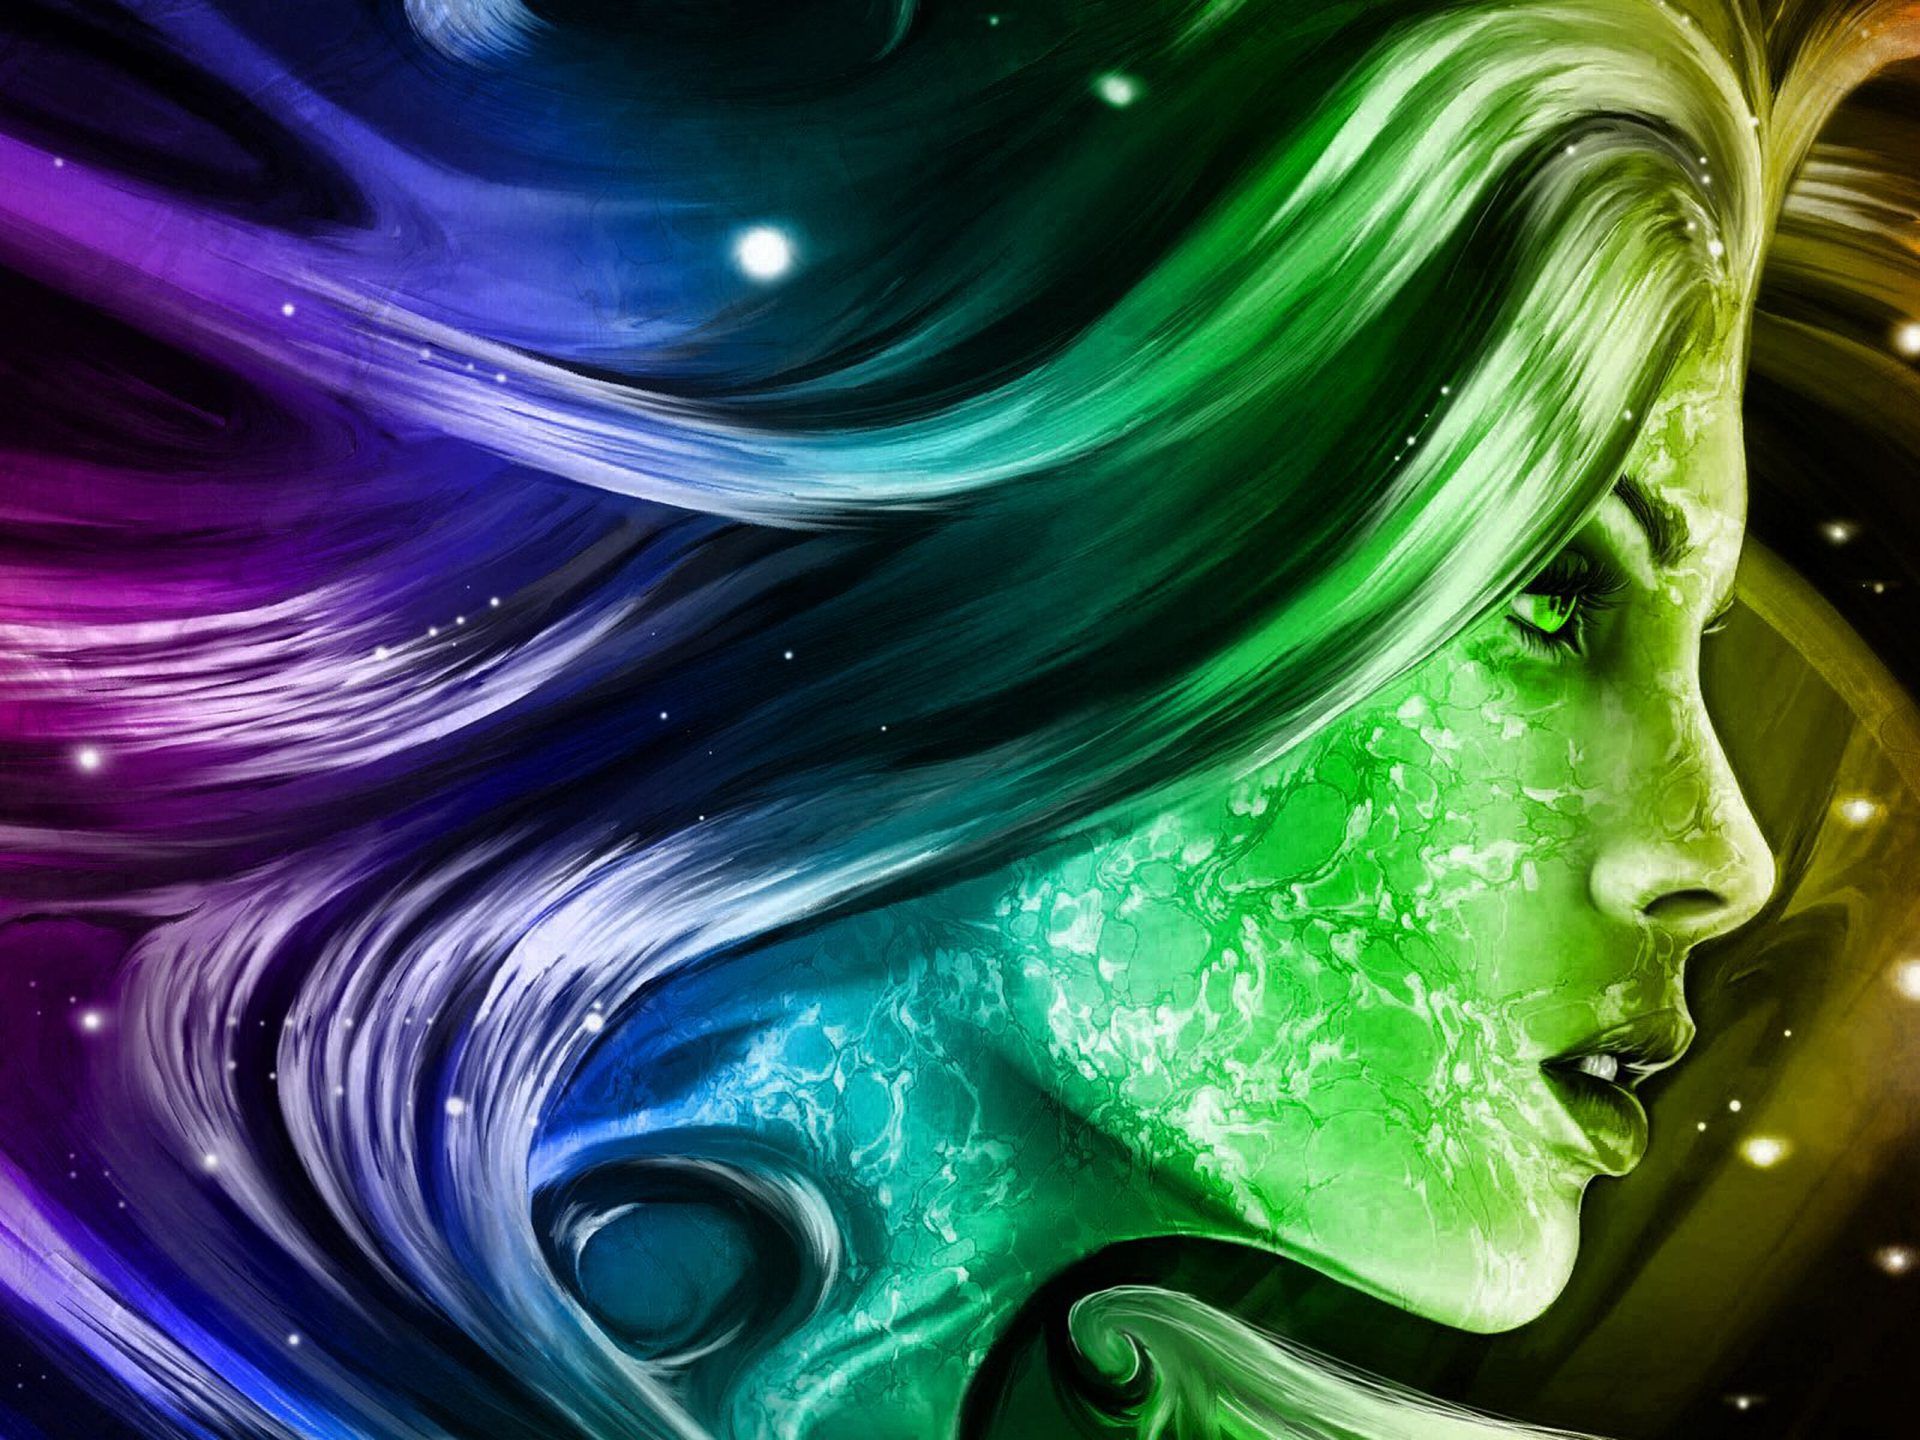 Rainbow Girl 3D Fantasy Abstract Art Digital HD Wallpaper For Mobile Phones And Laptops 3840x2400, Wallpaper13.com